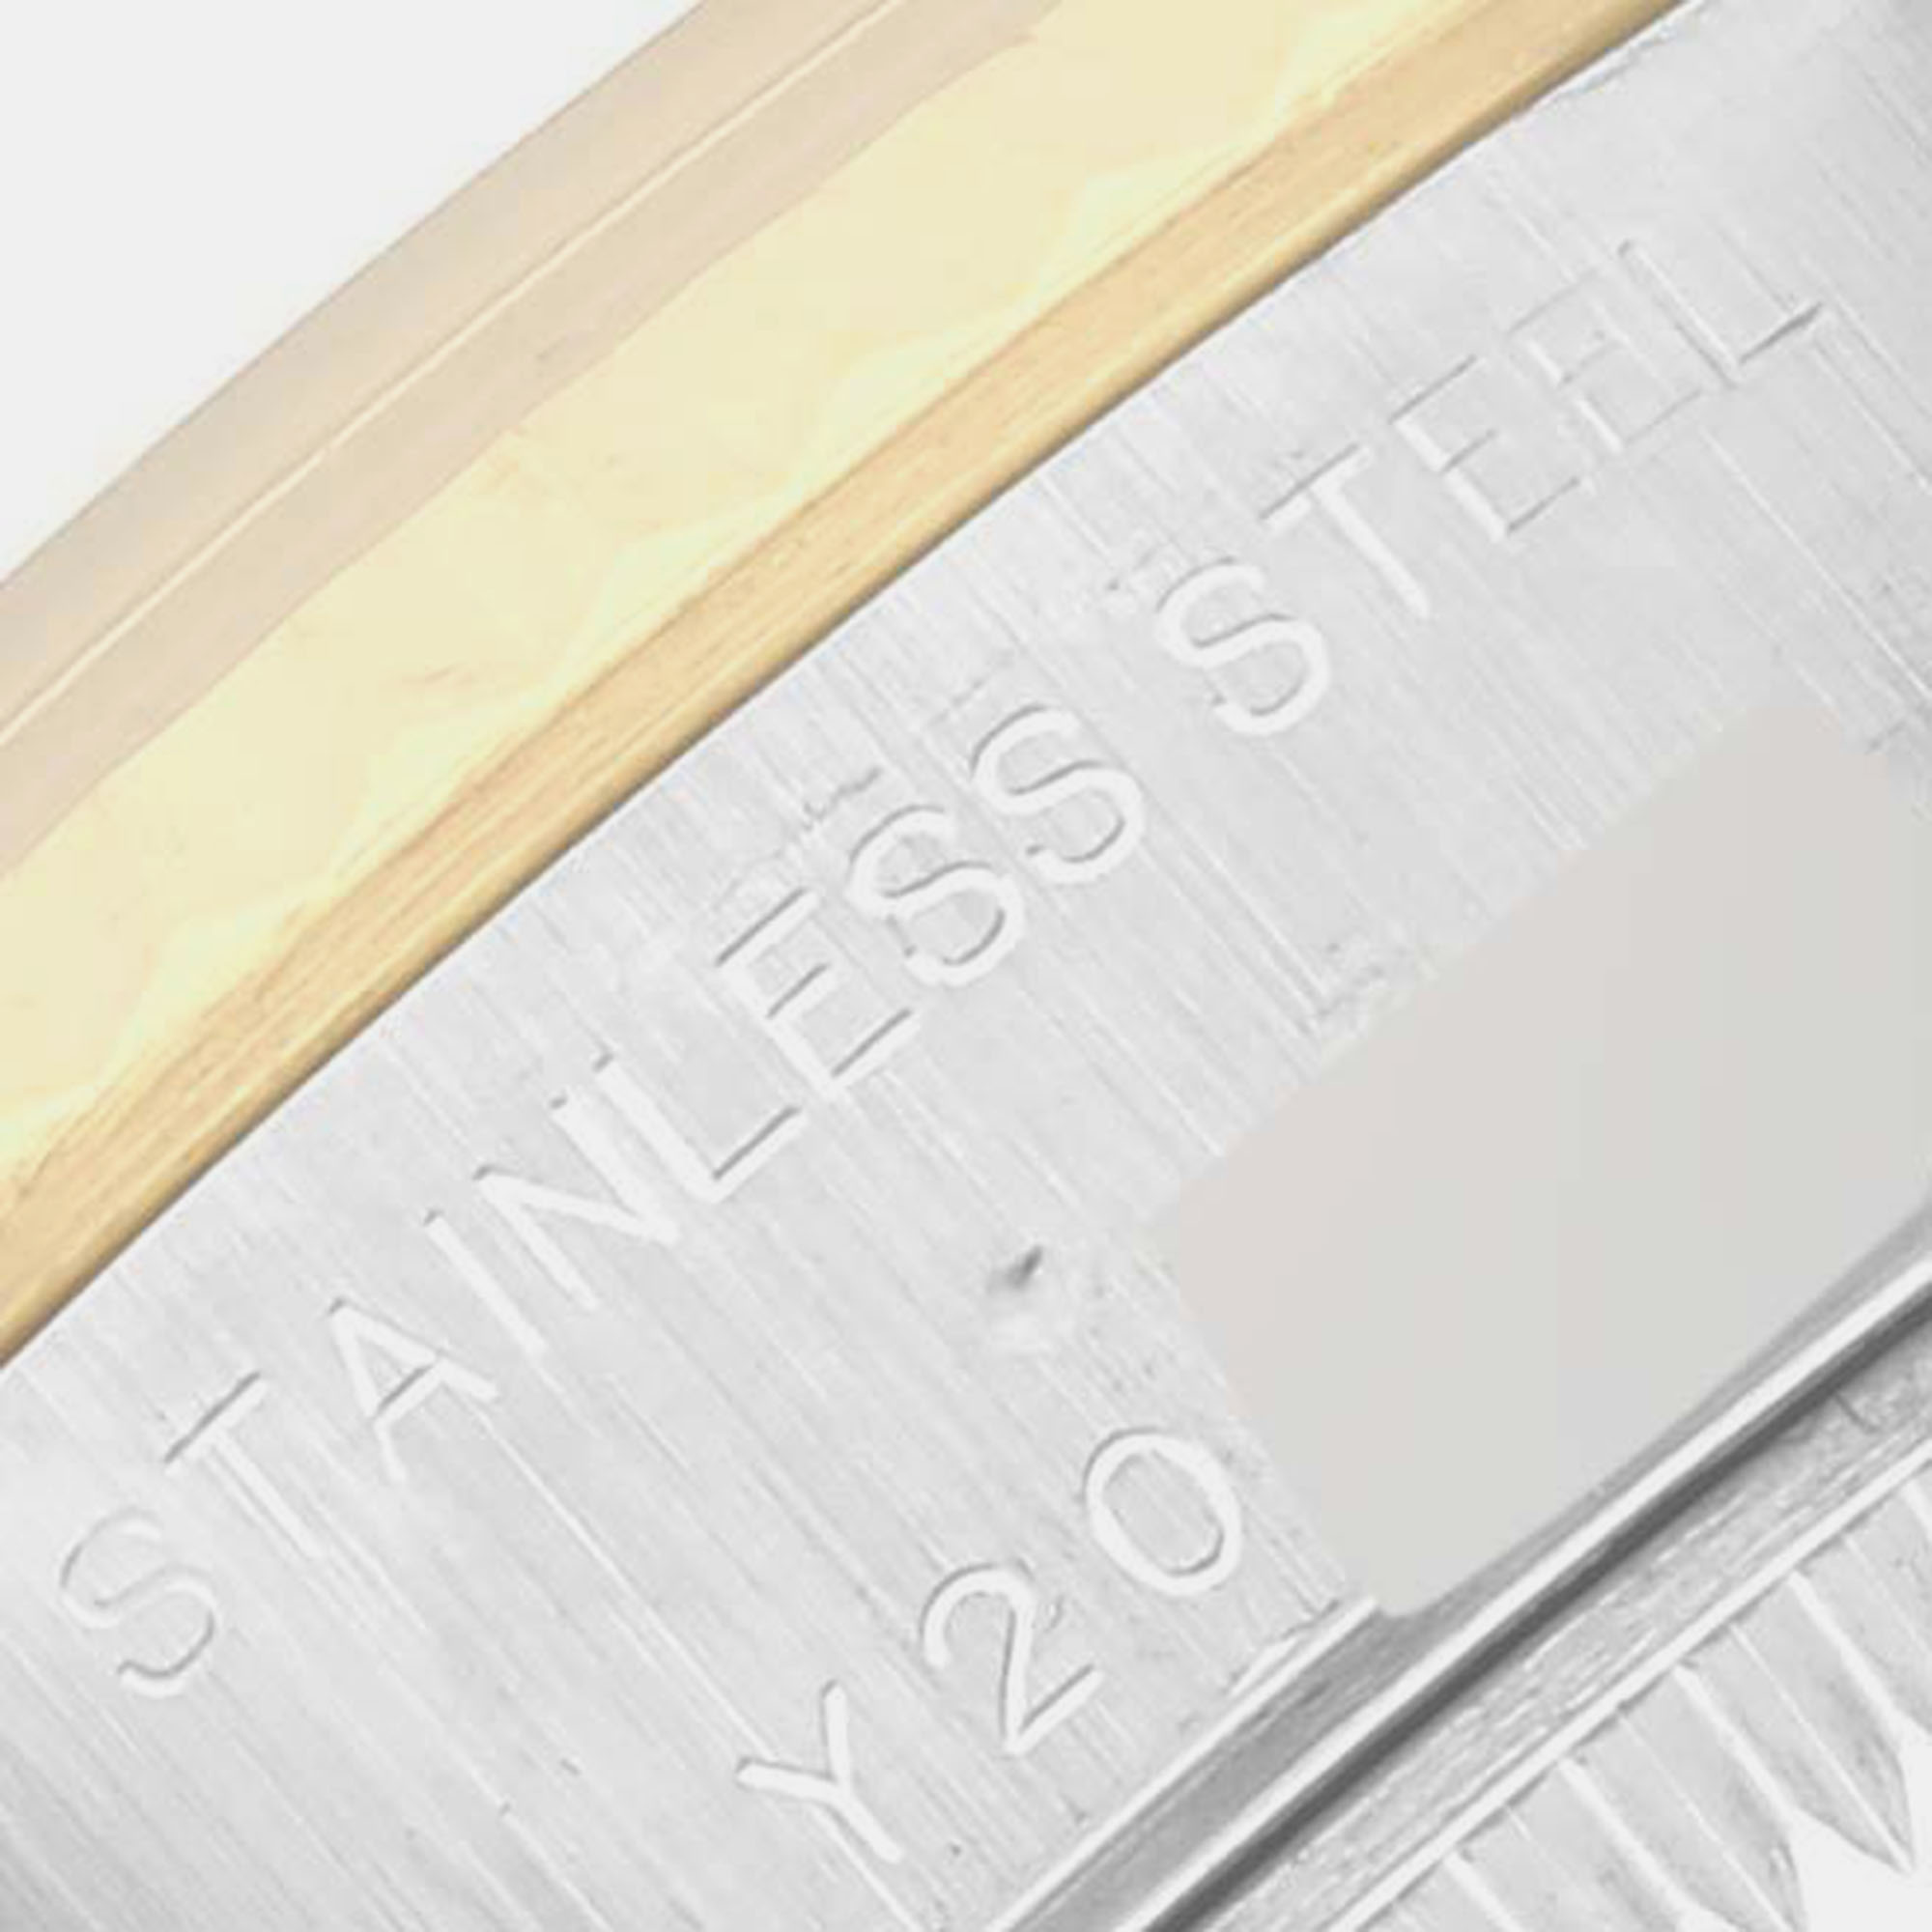 Rolex Datejust Steel Yellow Gold Slate Roman Dial Ladies Watch 79173 26 Mm